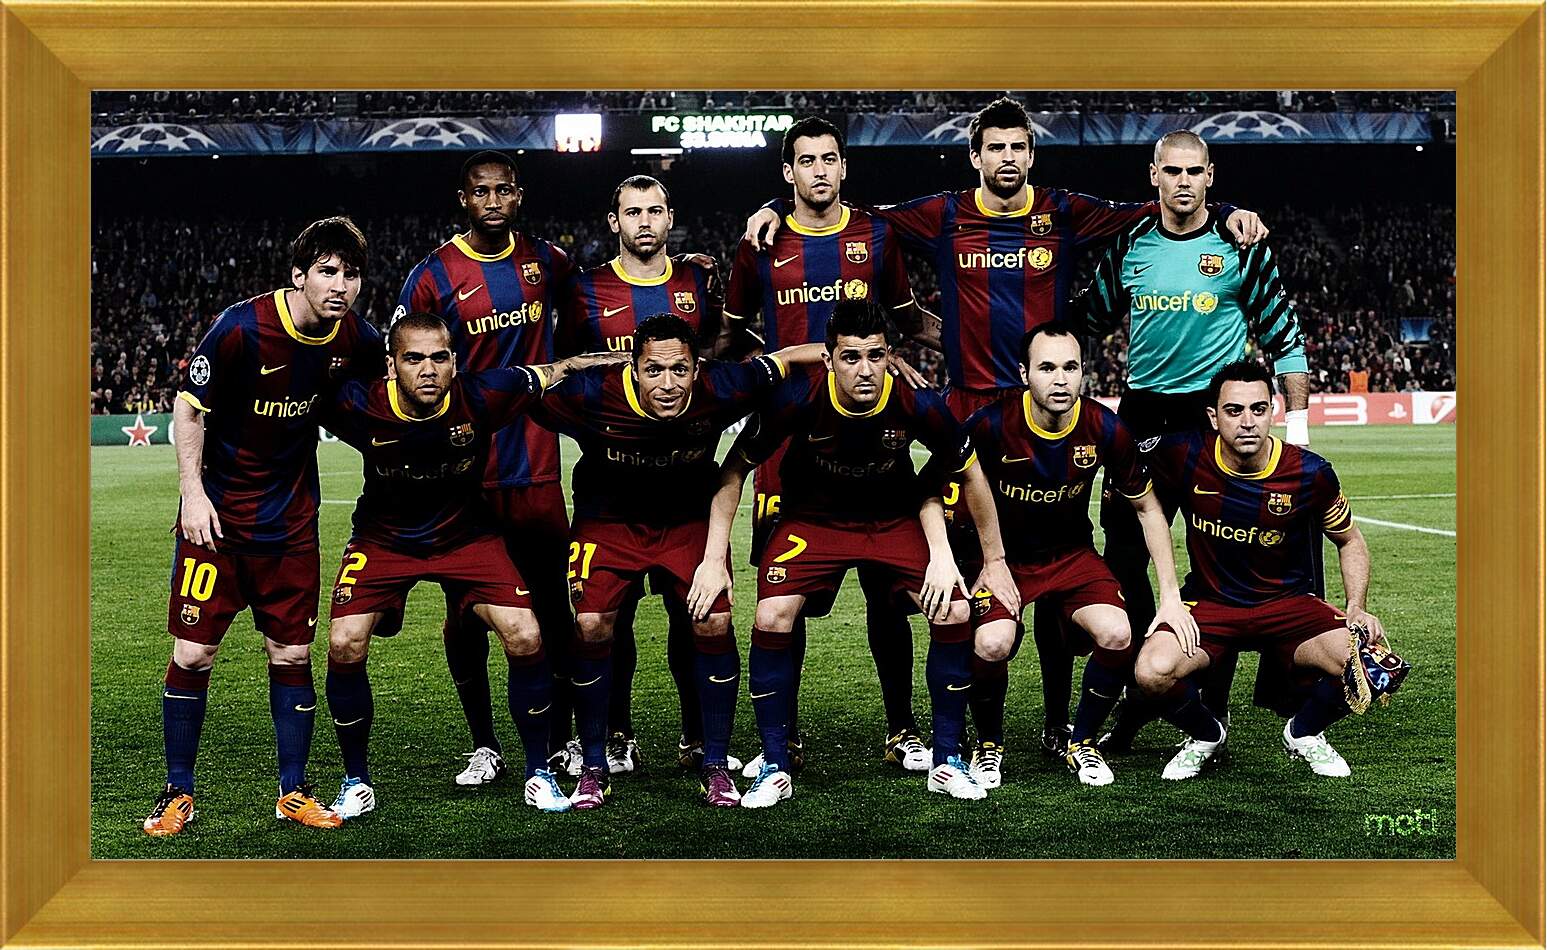 Картина в раме - Фото перед матчем ФК Барселона. FC Barcelona